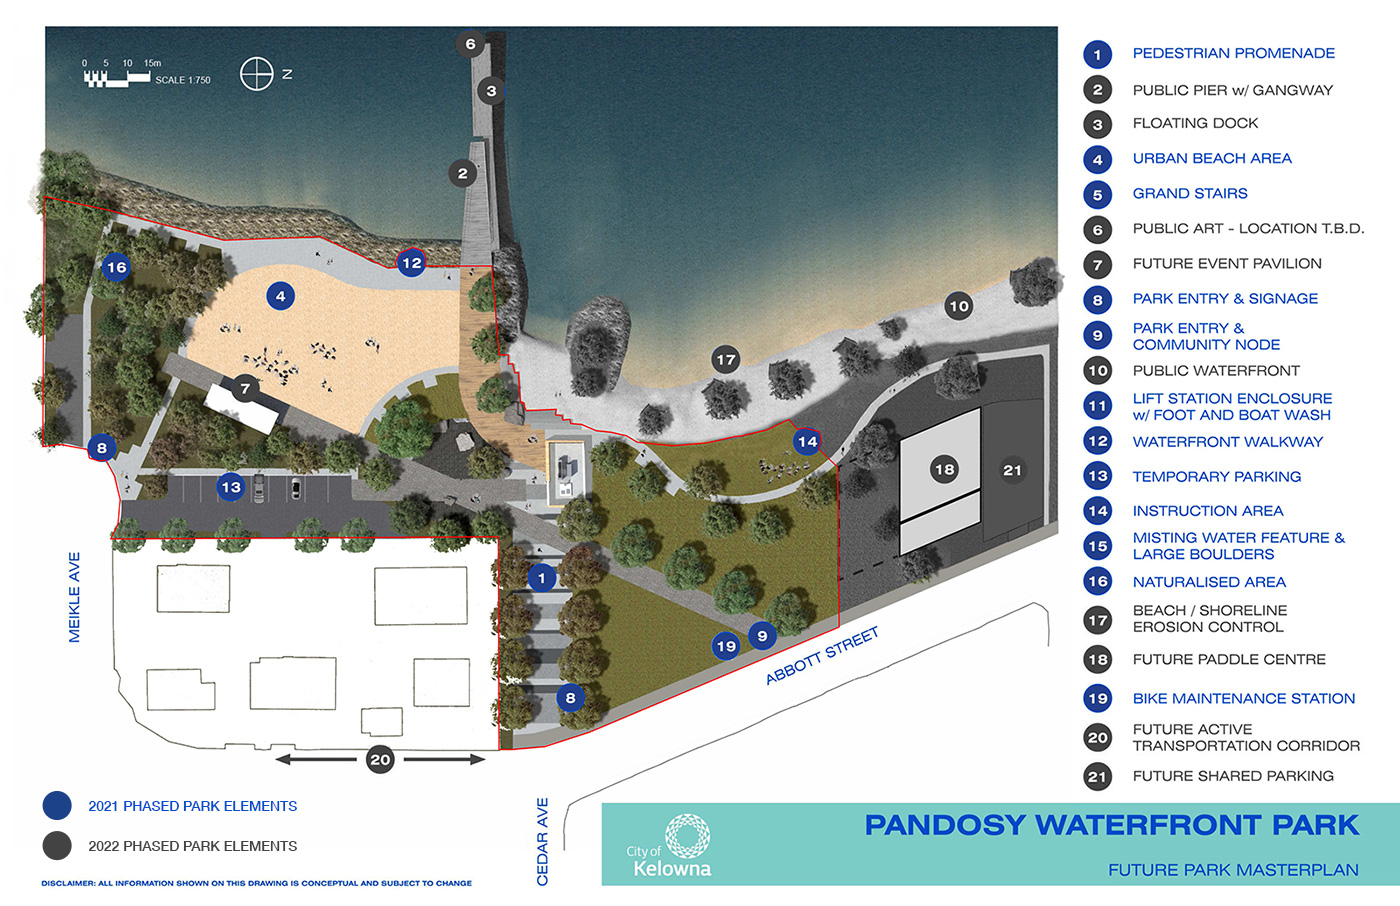 2021 Pandosy Waterfront Park Masterplan